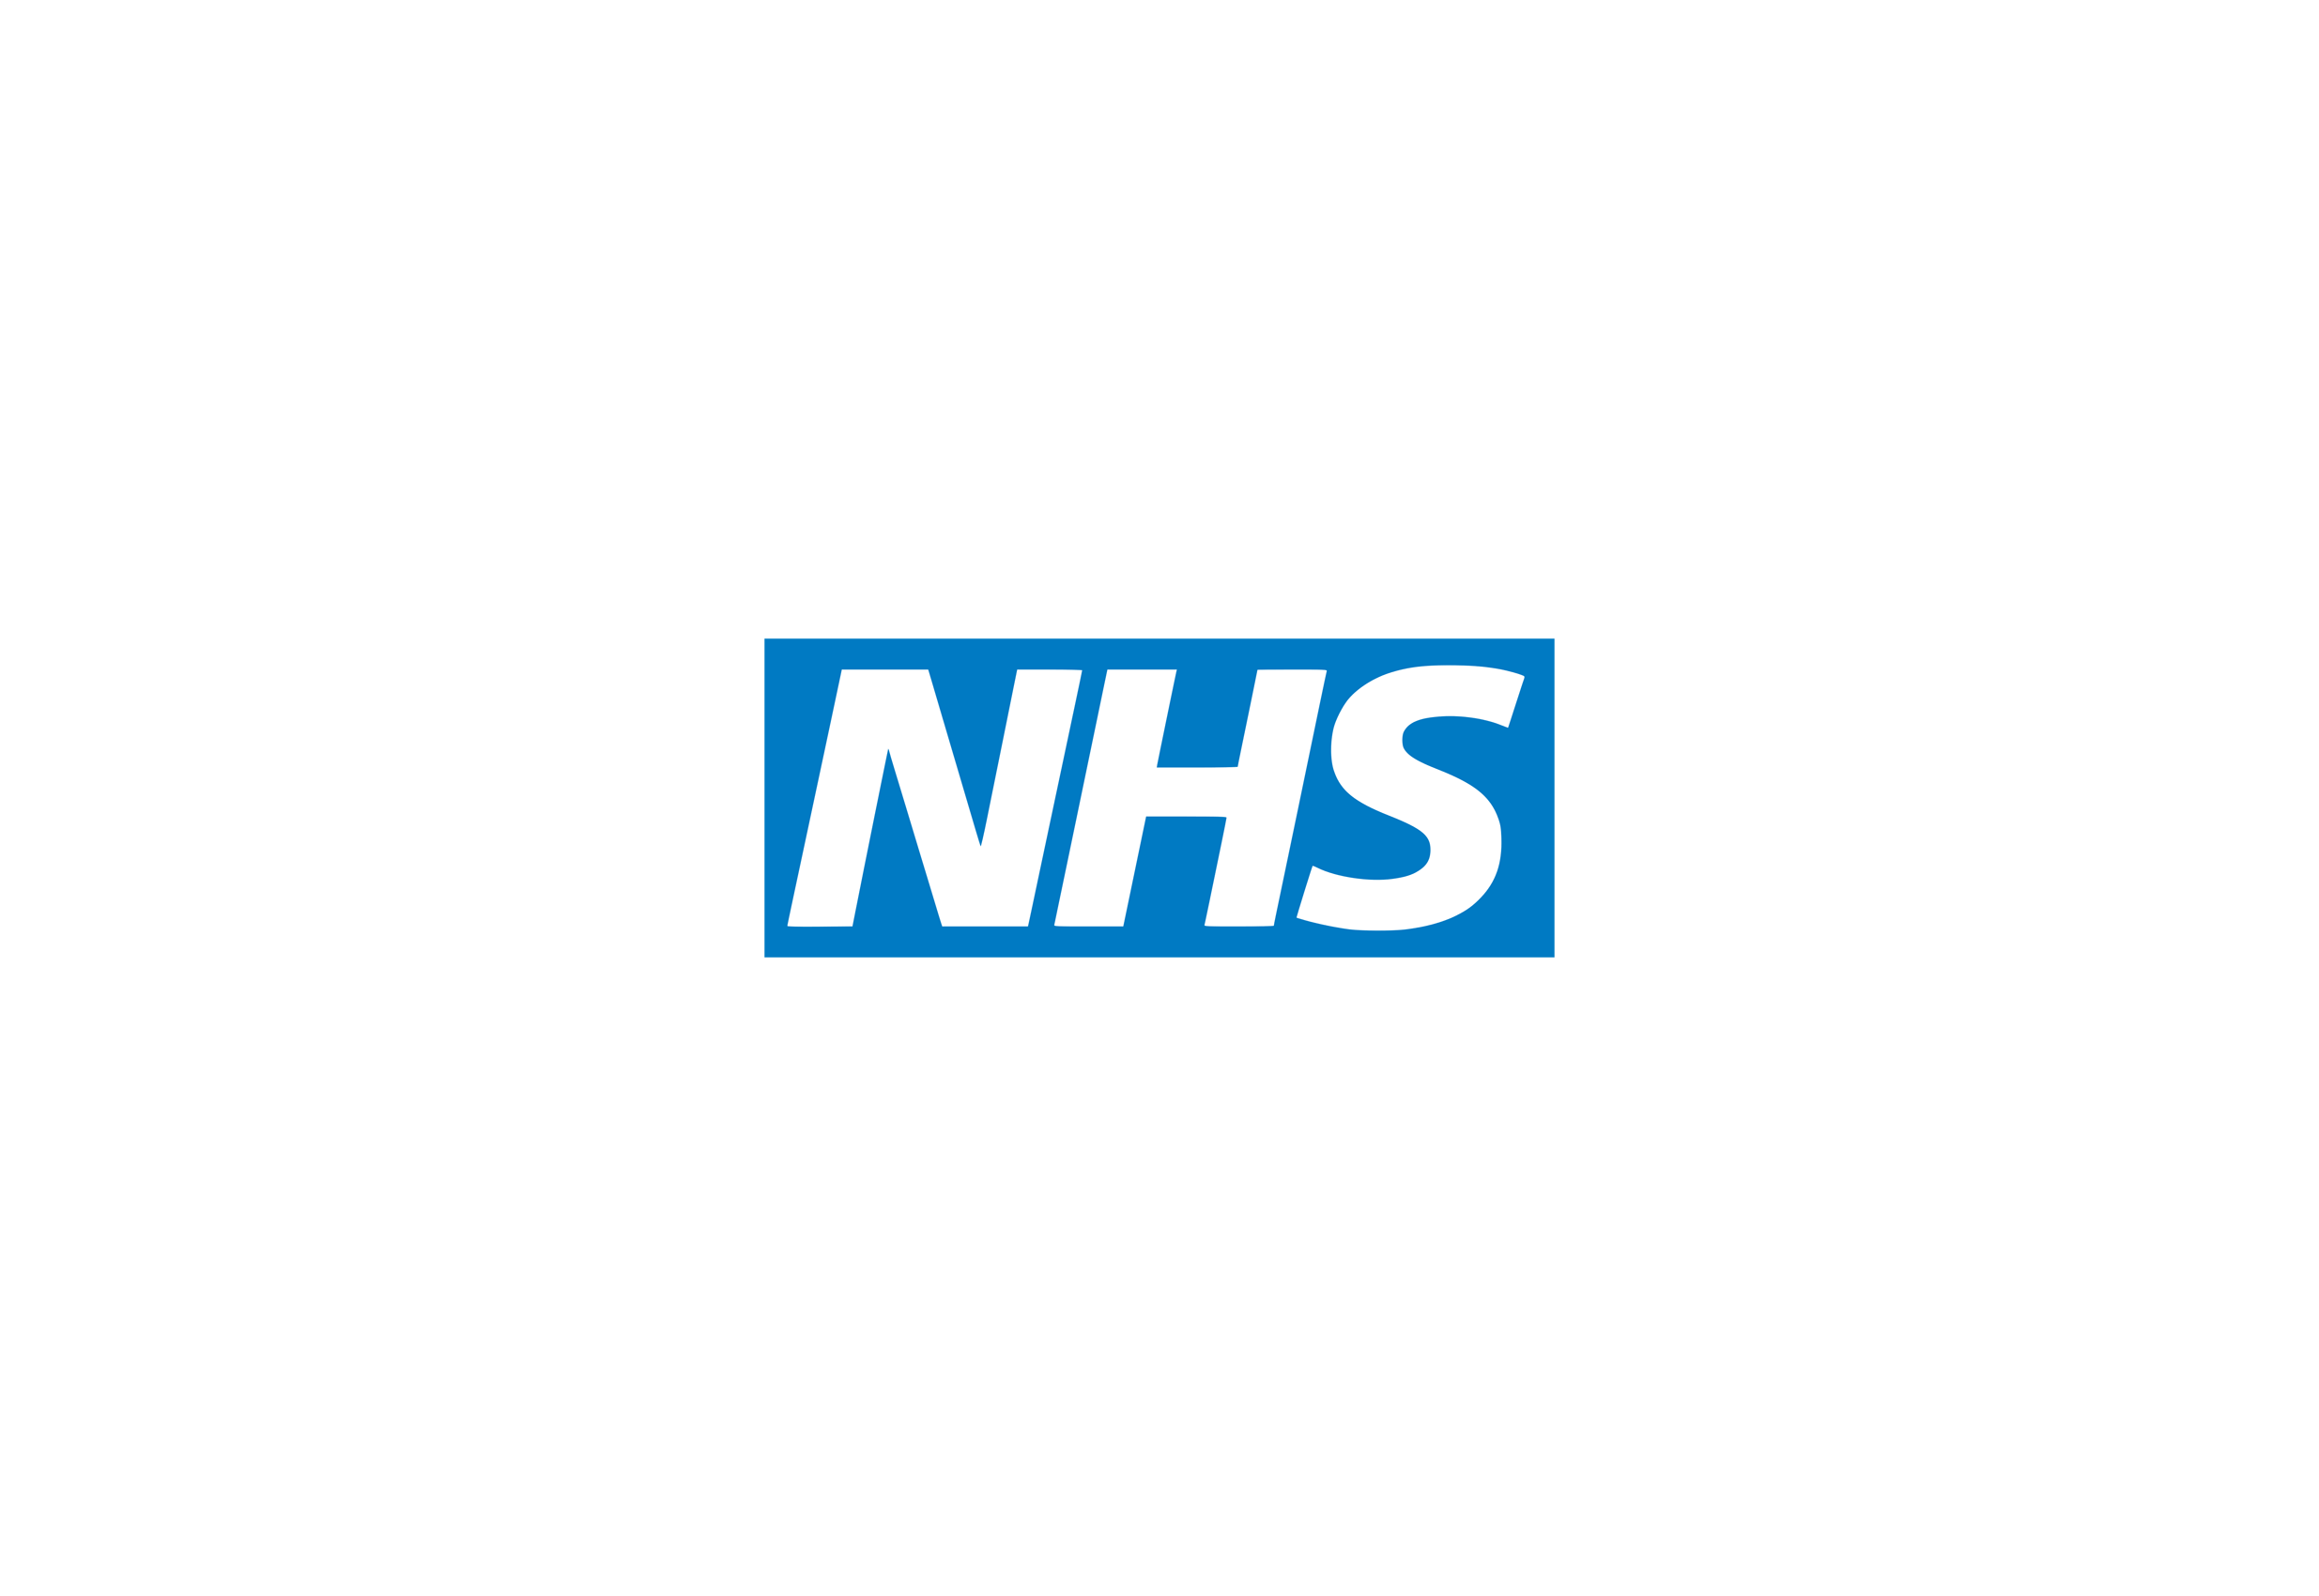 Health Service Logo - National Health Service logo | Dwglogo